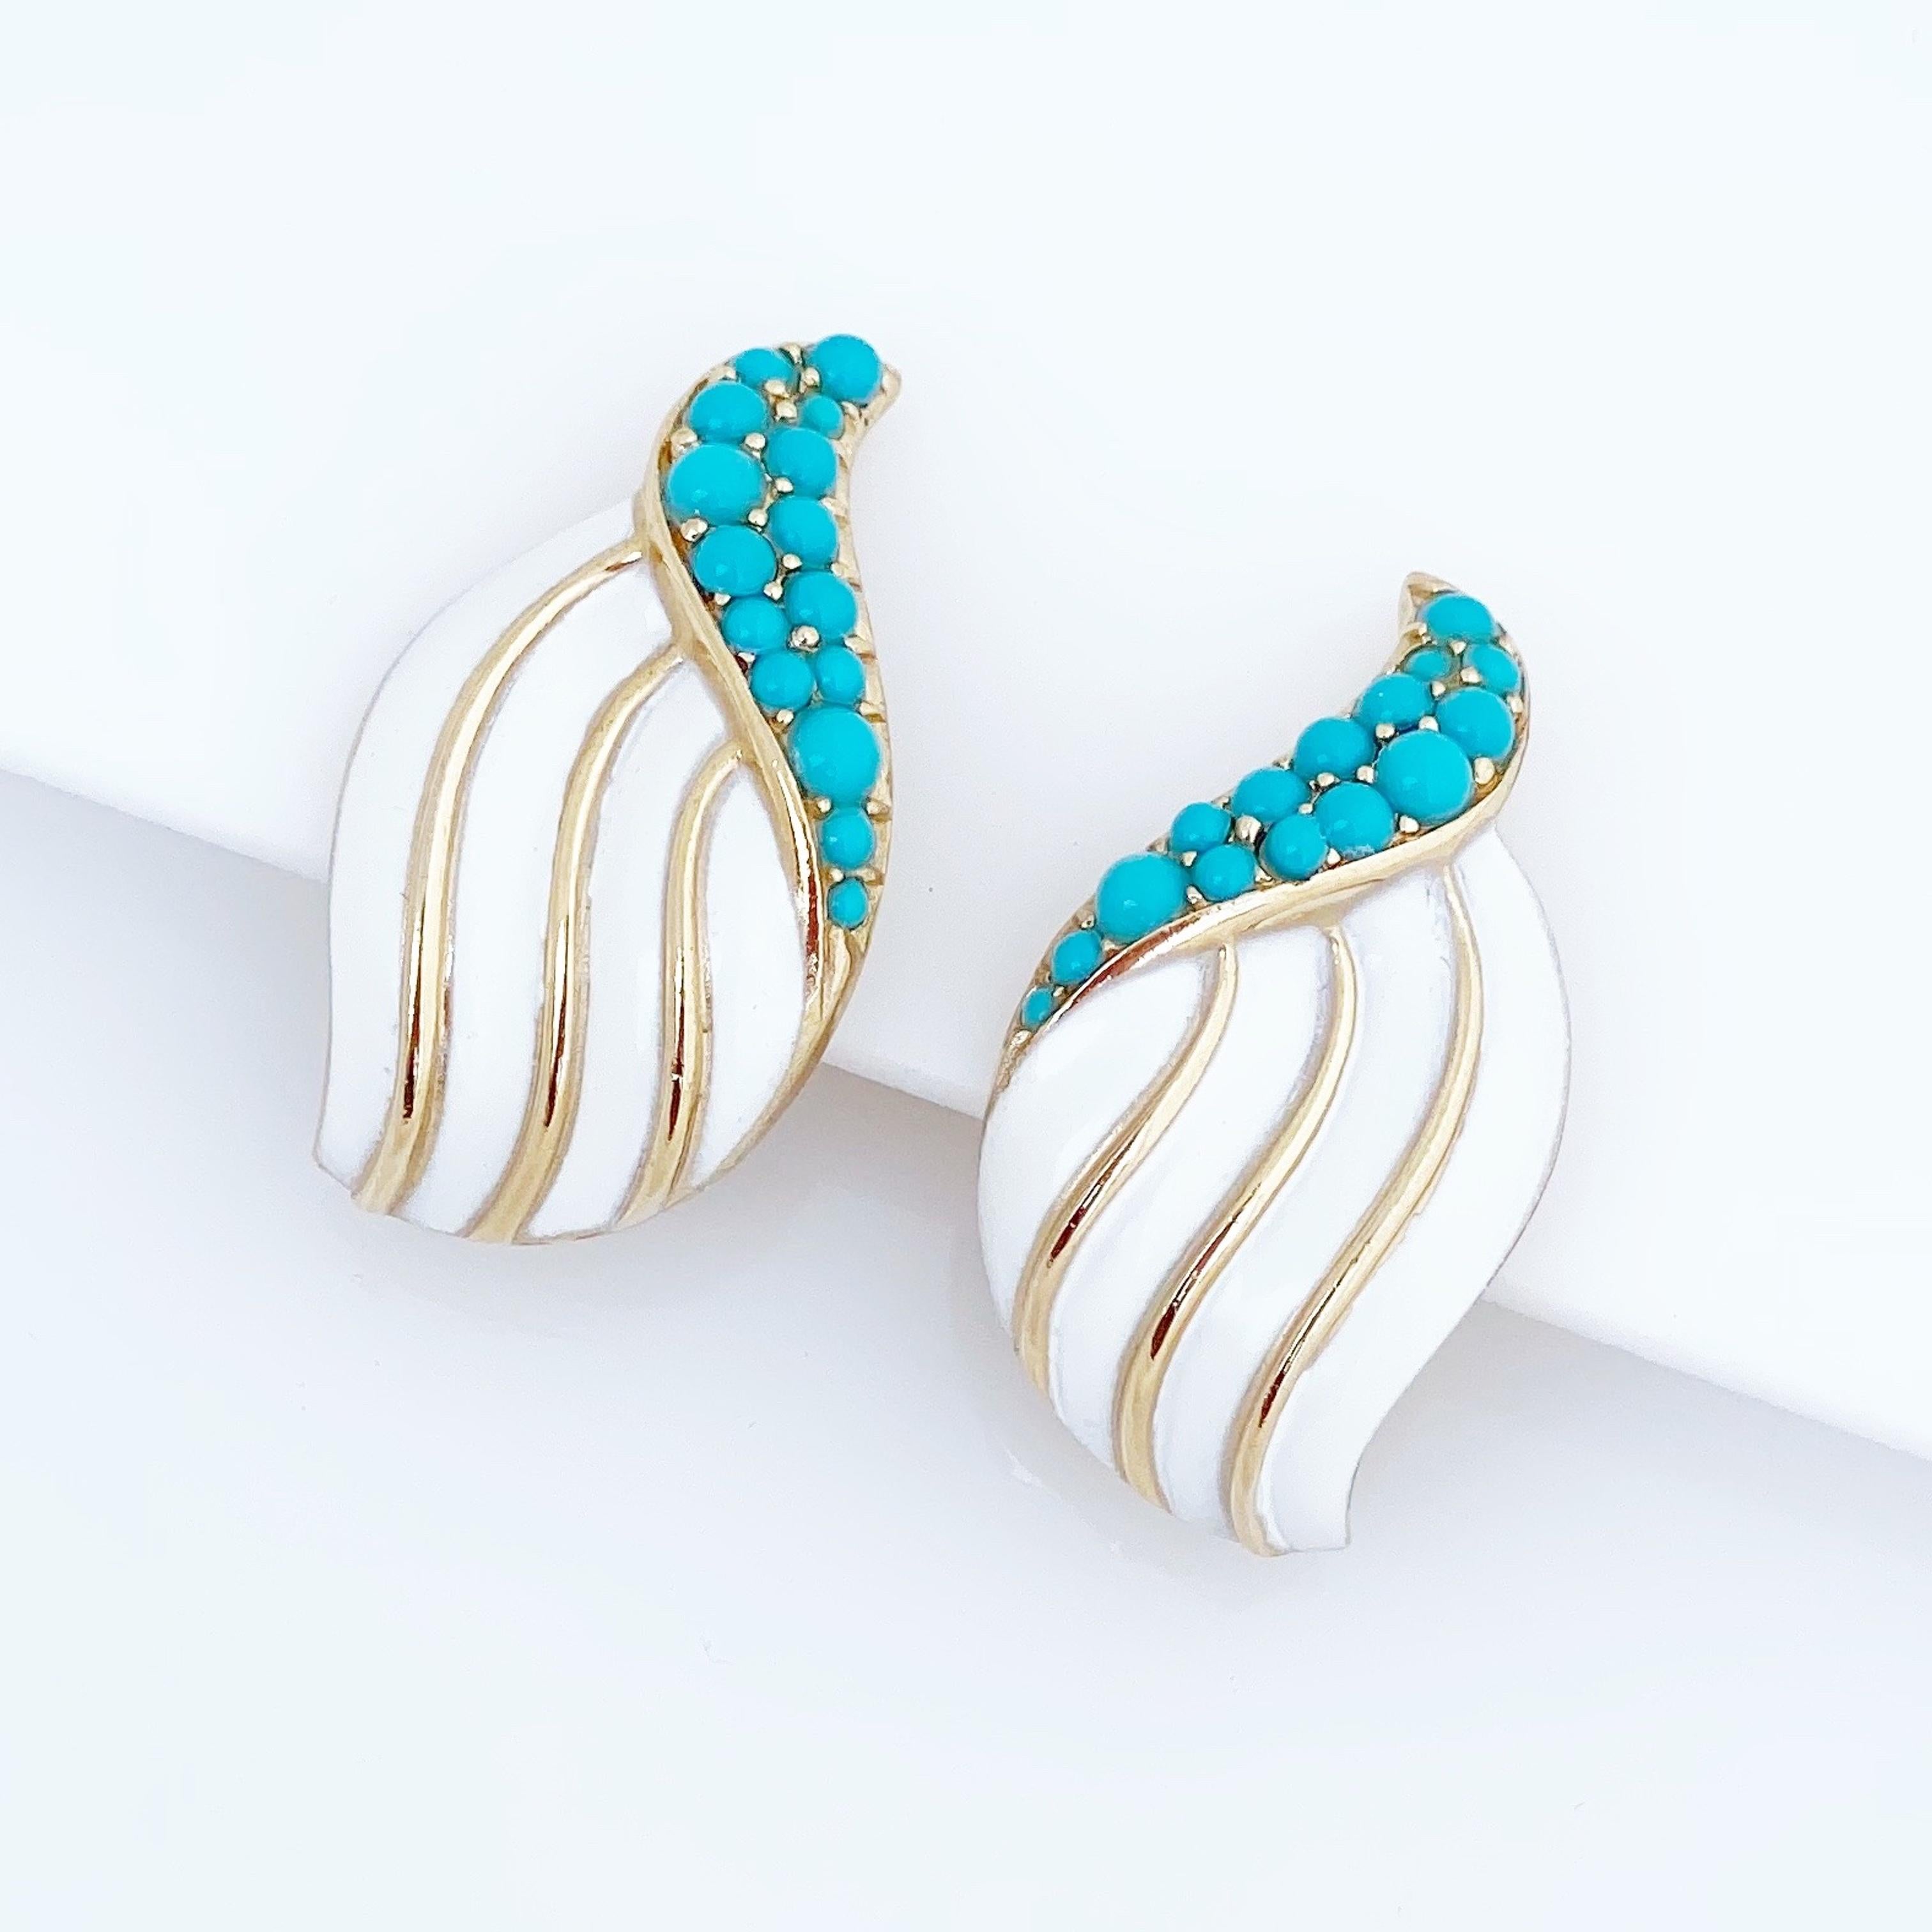 Modern Turquoise and White Enamel Leaf Earrings By Crown Trifari, 1960s